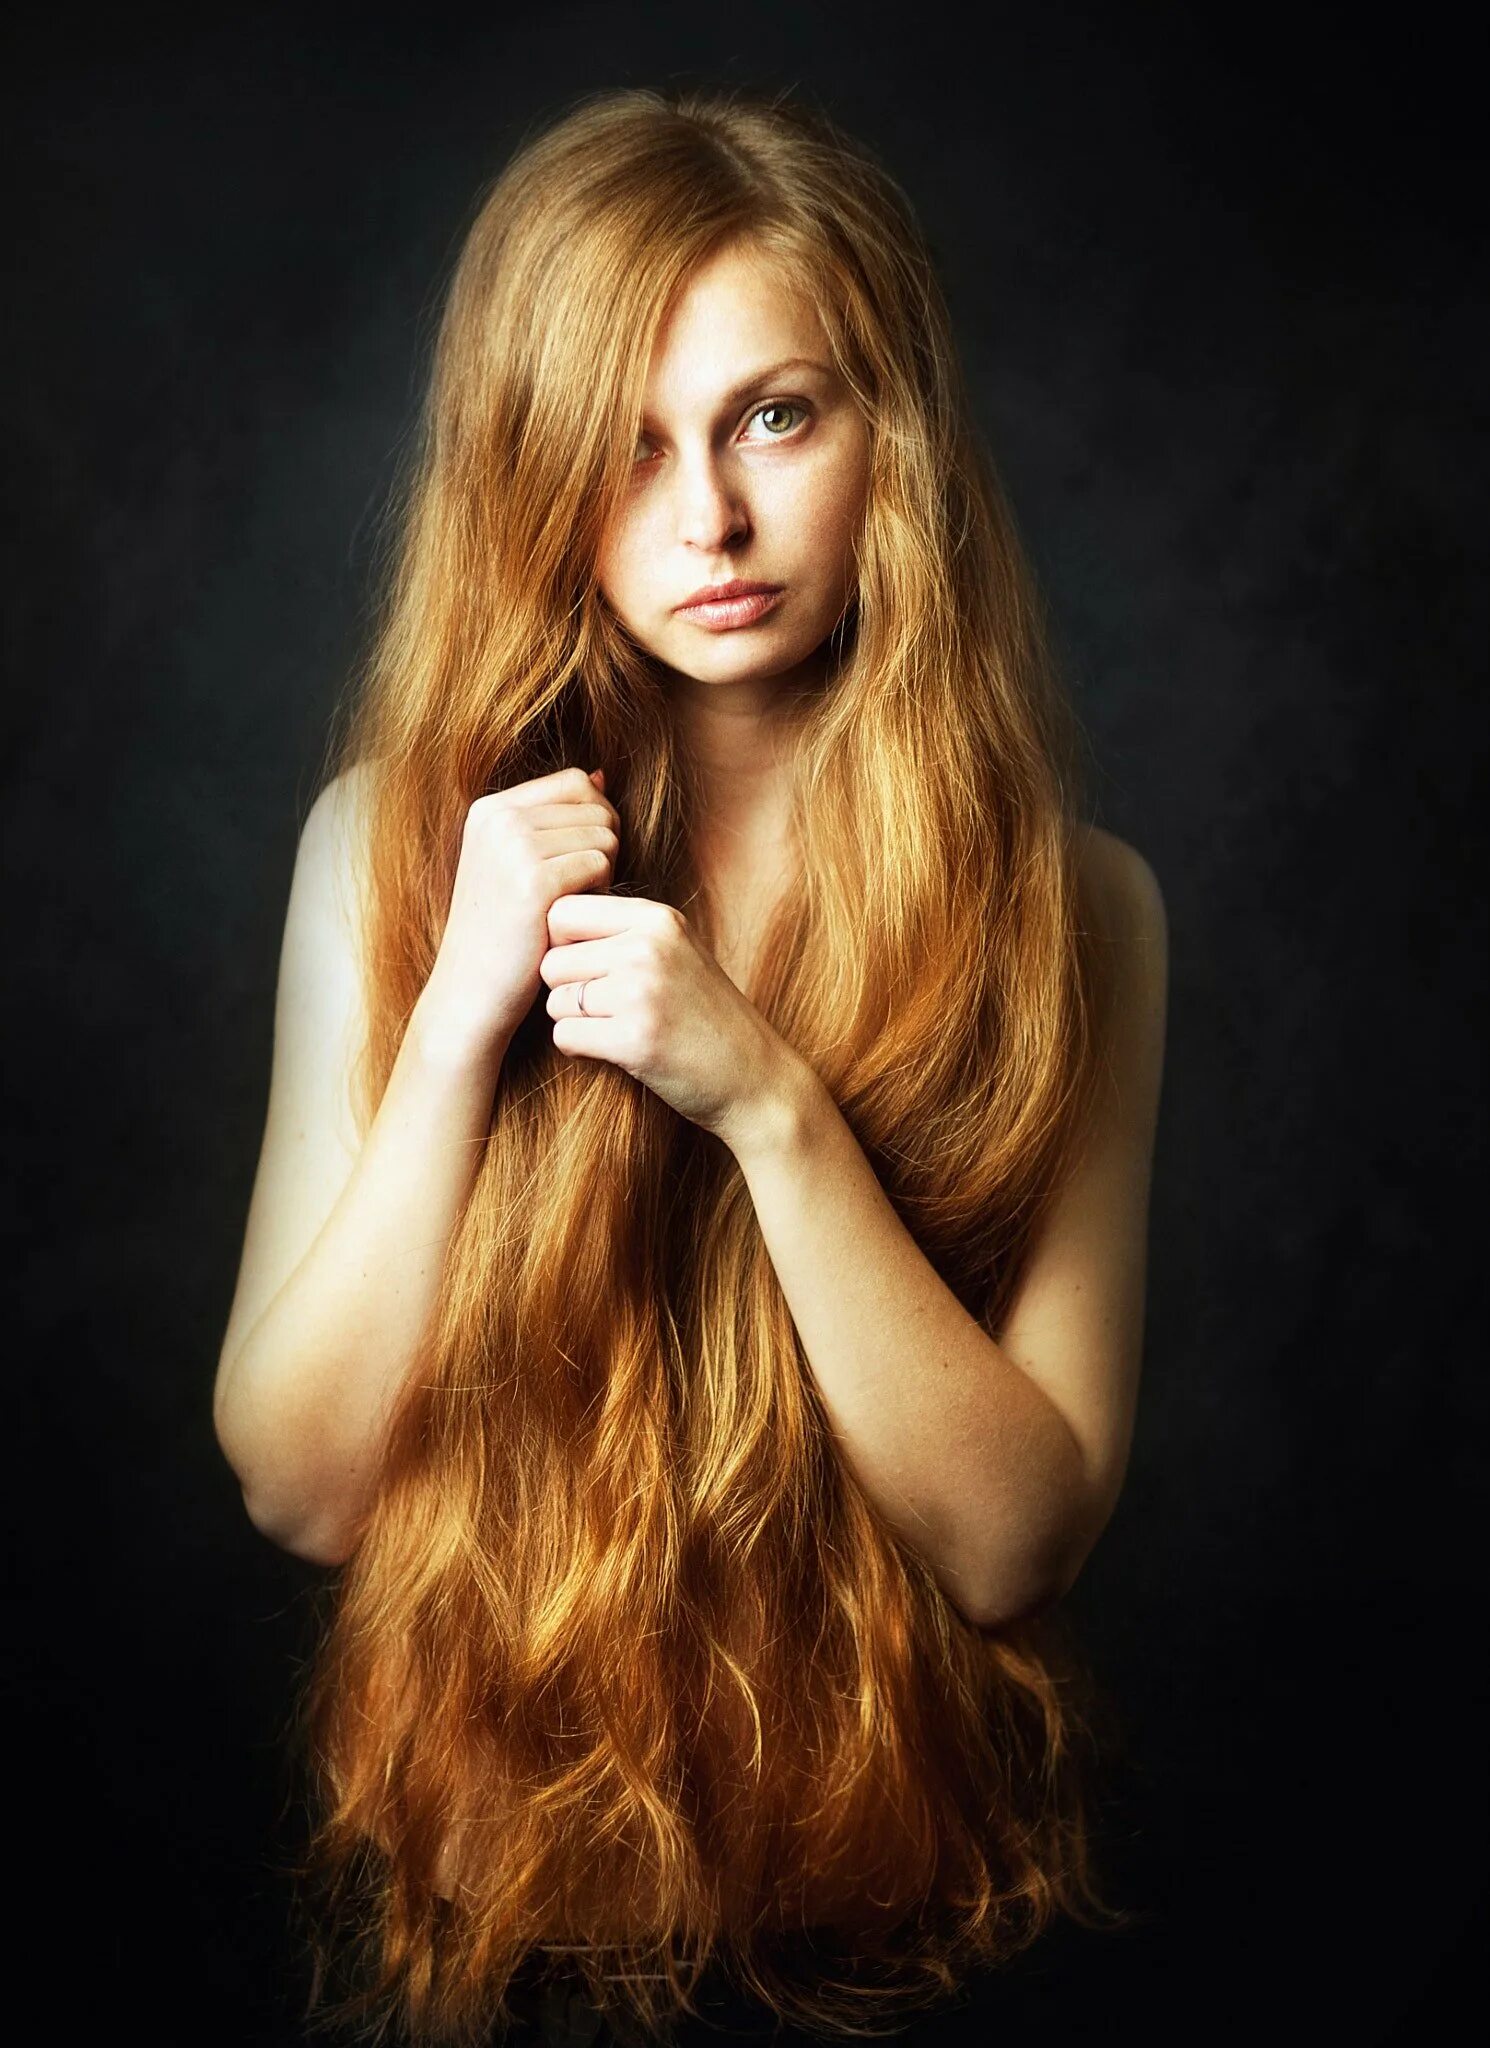 Девушка с золотыми волосами. Девушка с золотистыми волосами. Длинные волосы. Модели с длинными волосами